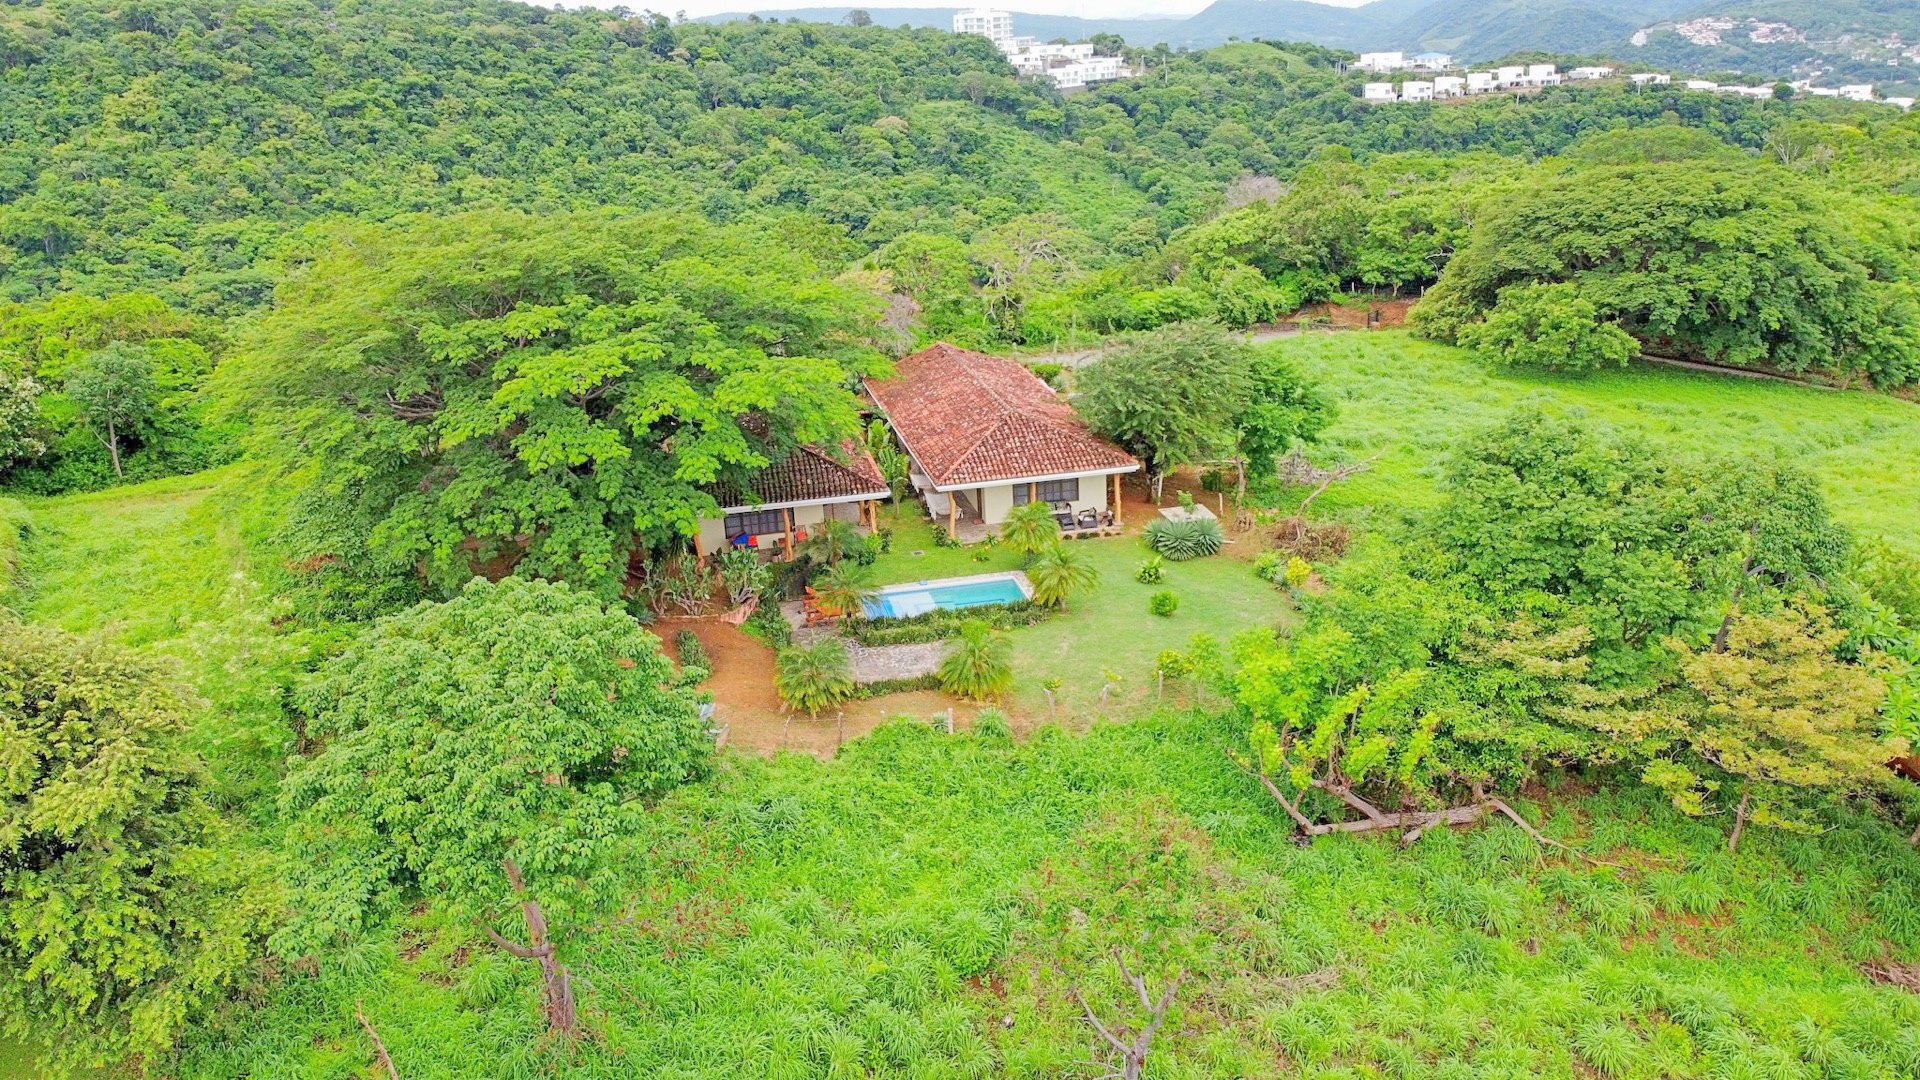 Home House Property for Sale San Juan Del Sur Nicaragua 11.jpg